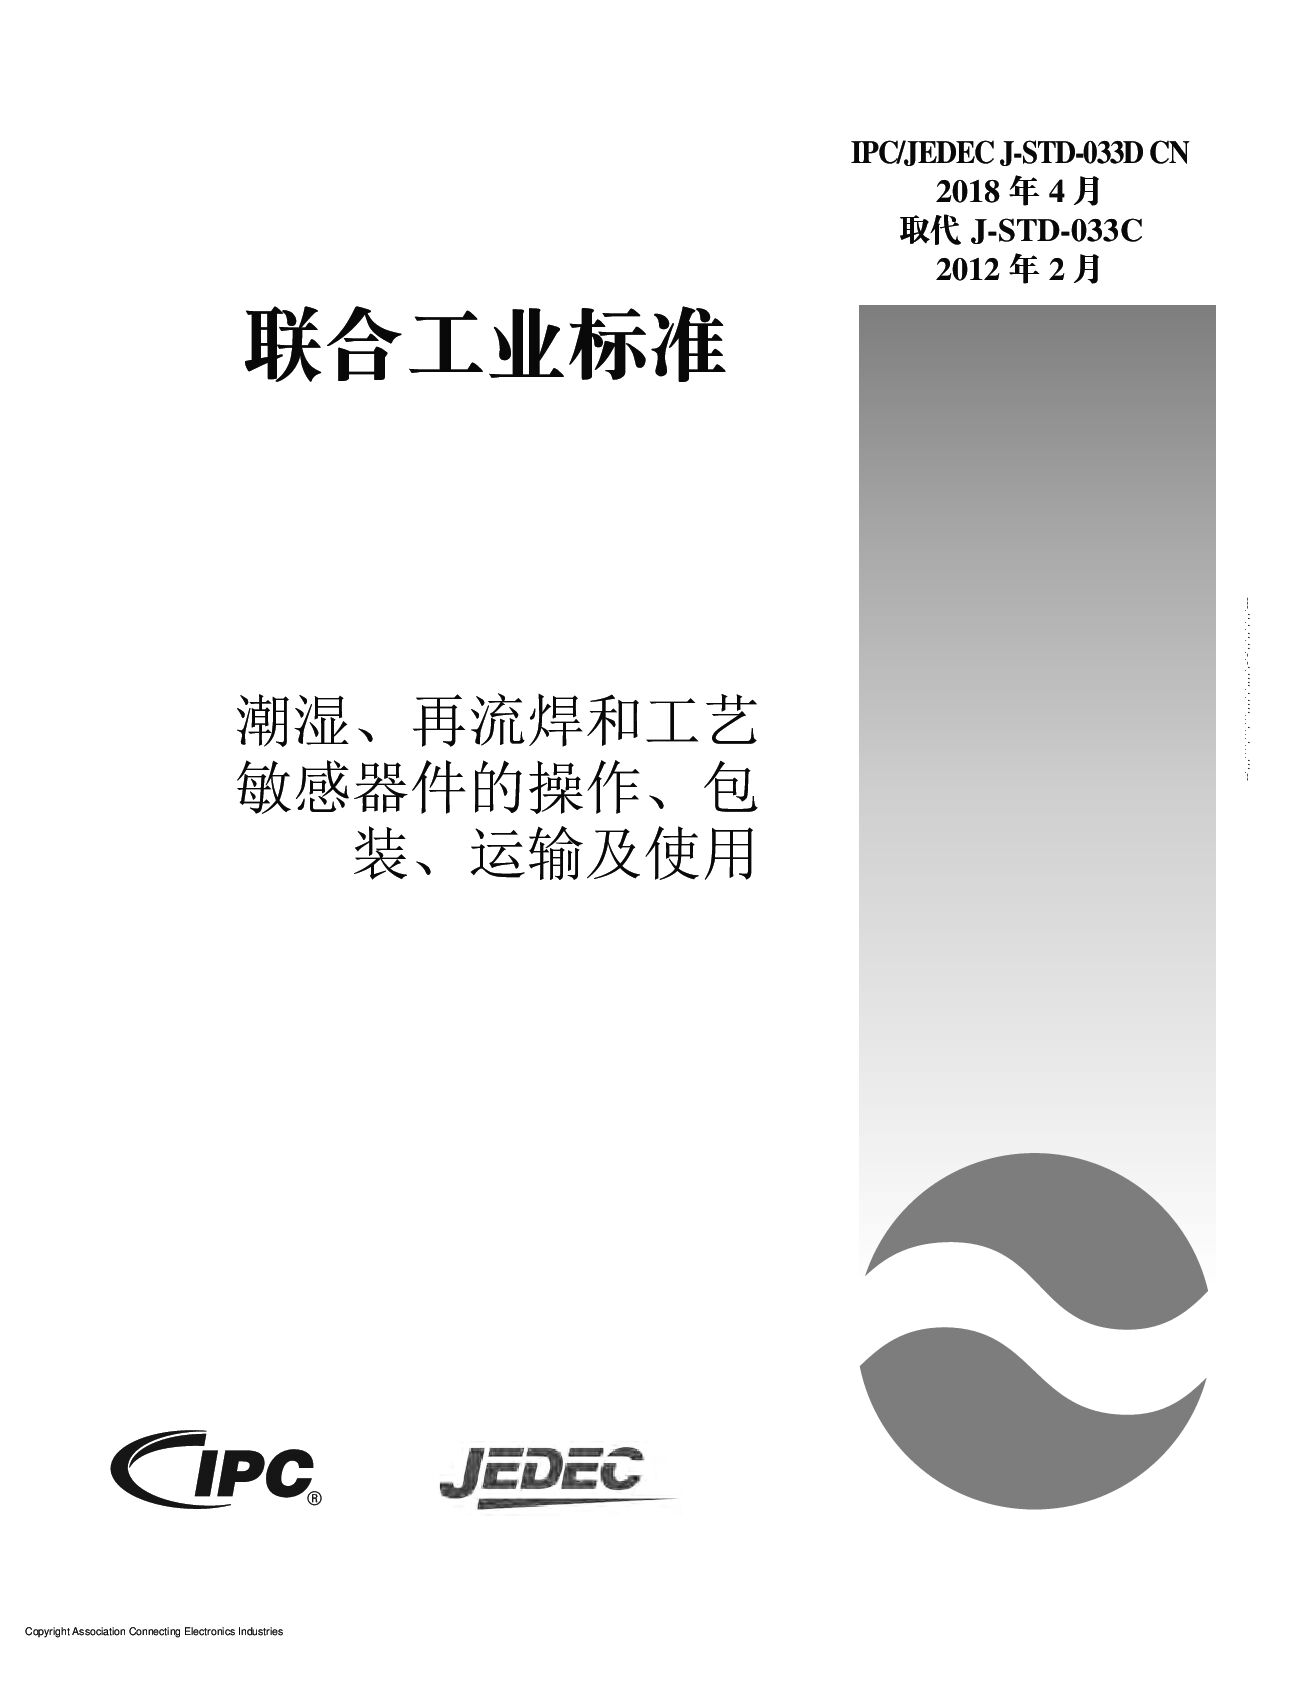 IPC/JEDEC J-STD-033D CHINESE-2018封面图